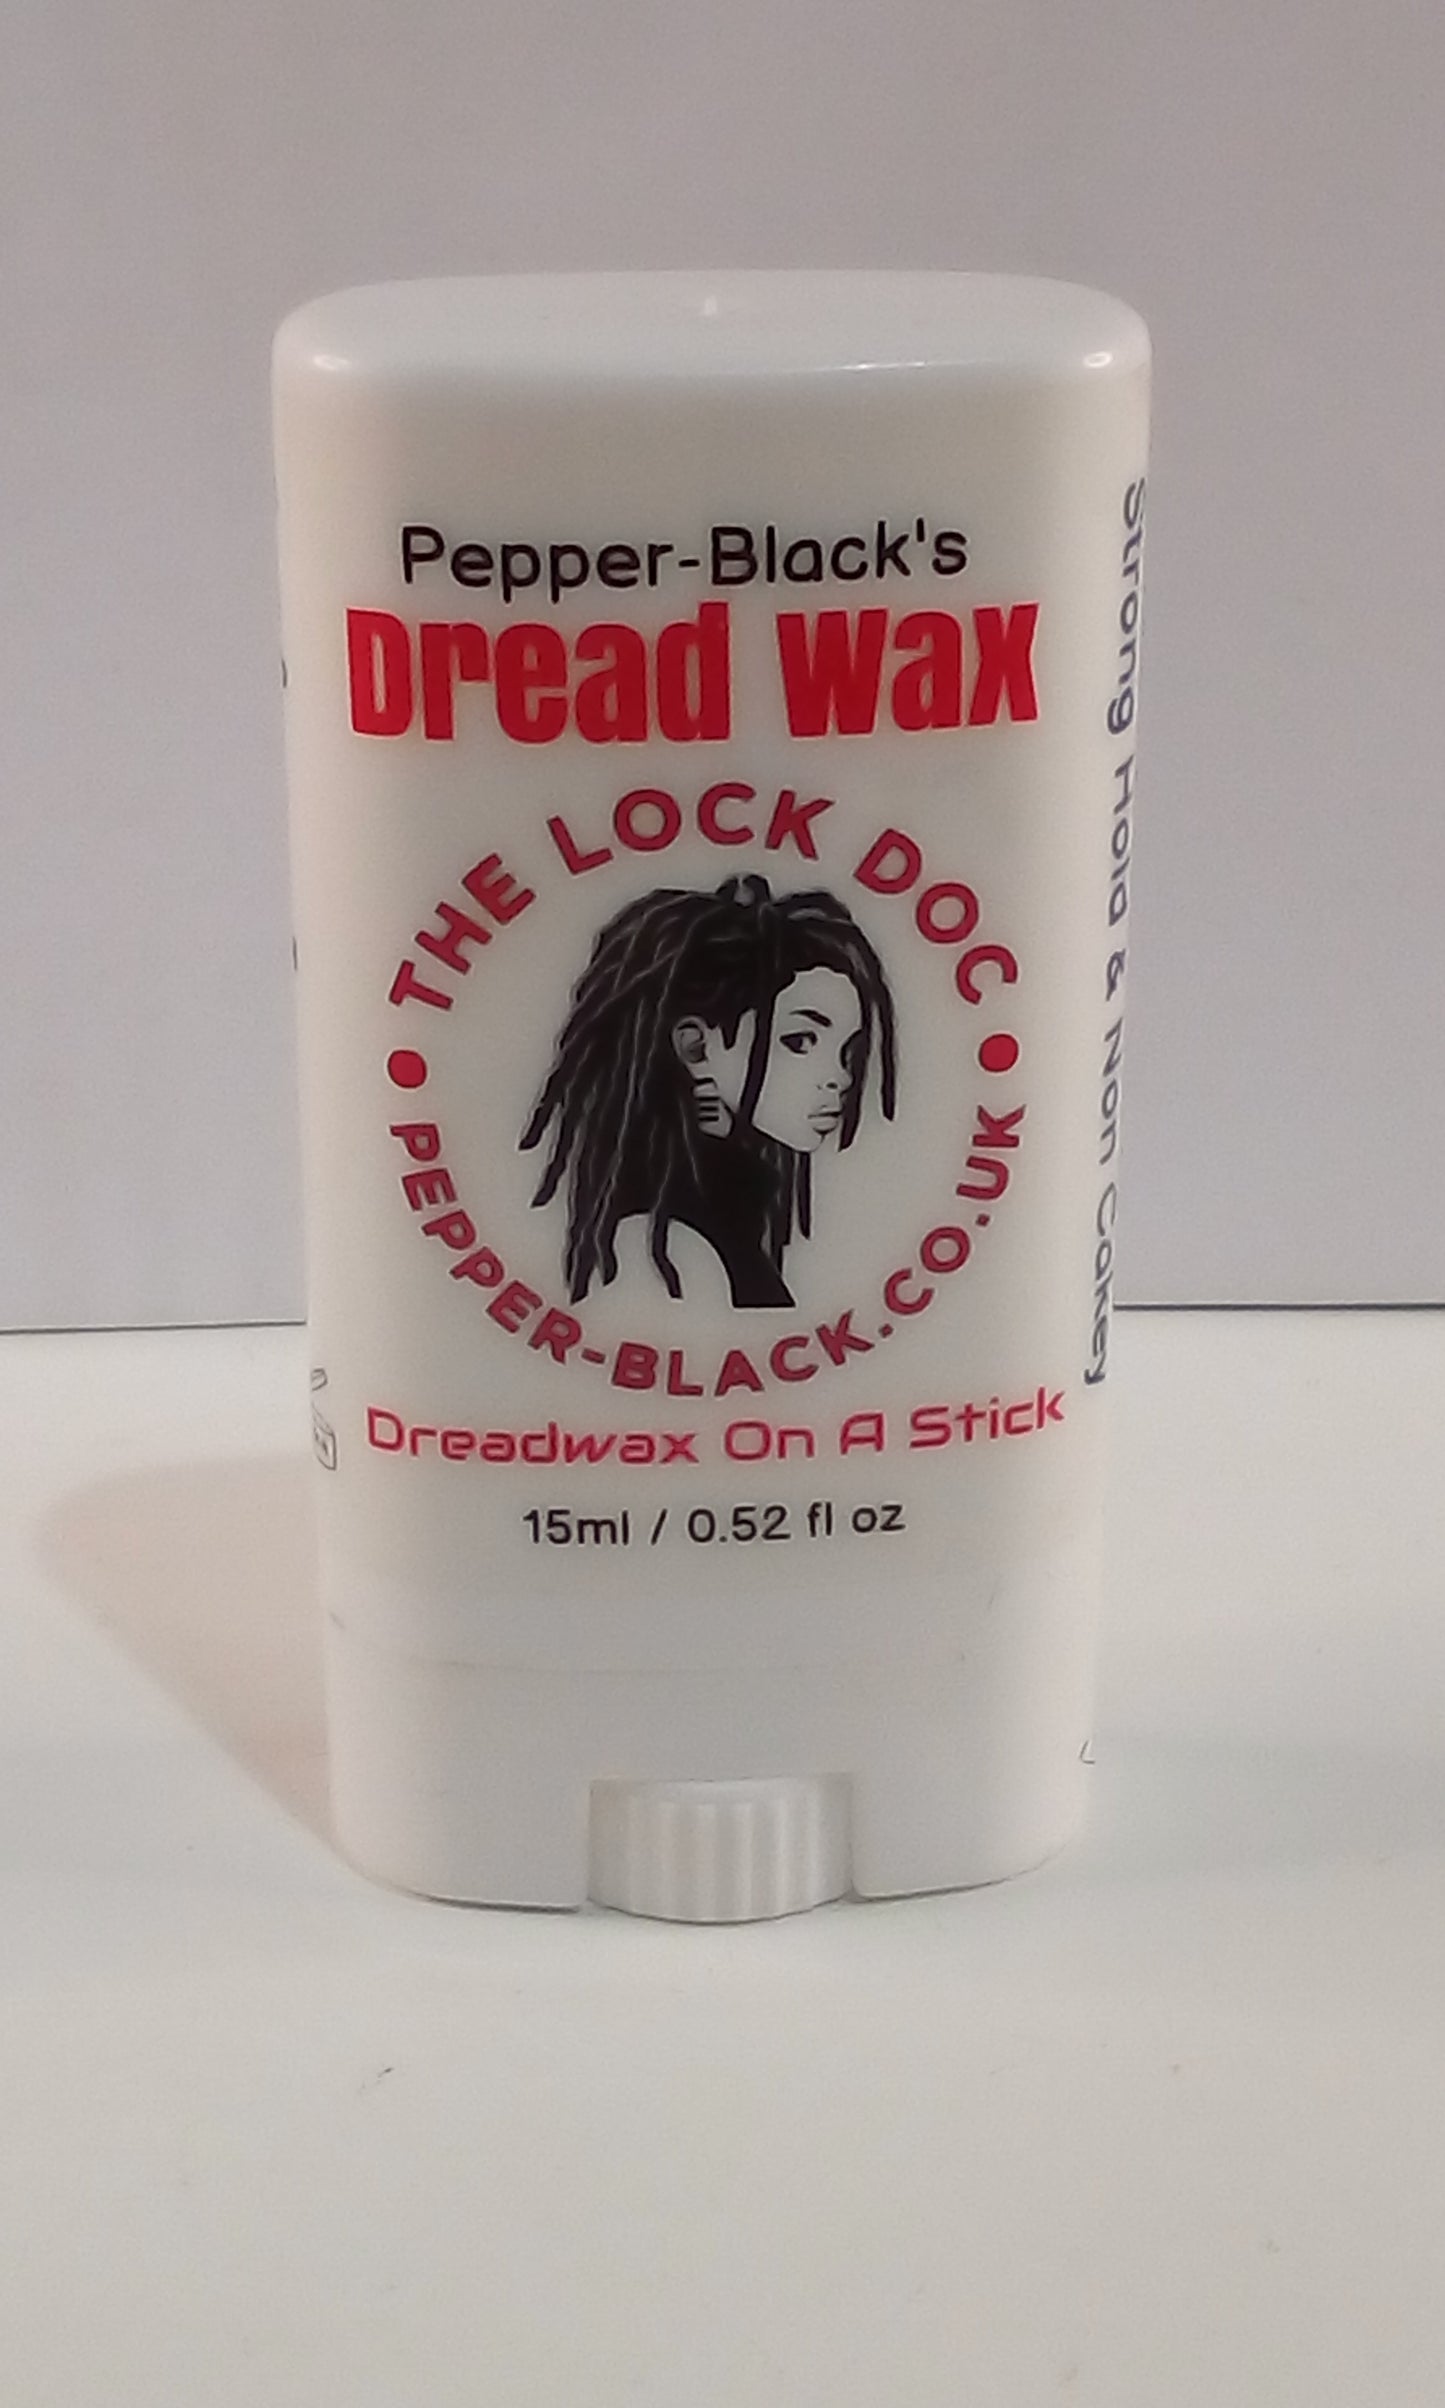 roll-on-dreadlocks- dreadwax-pepper-black-close-up